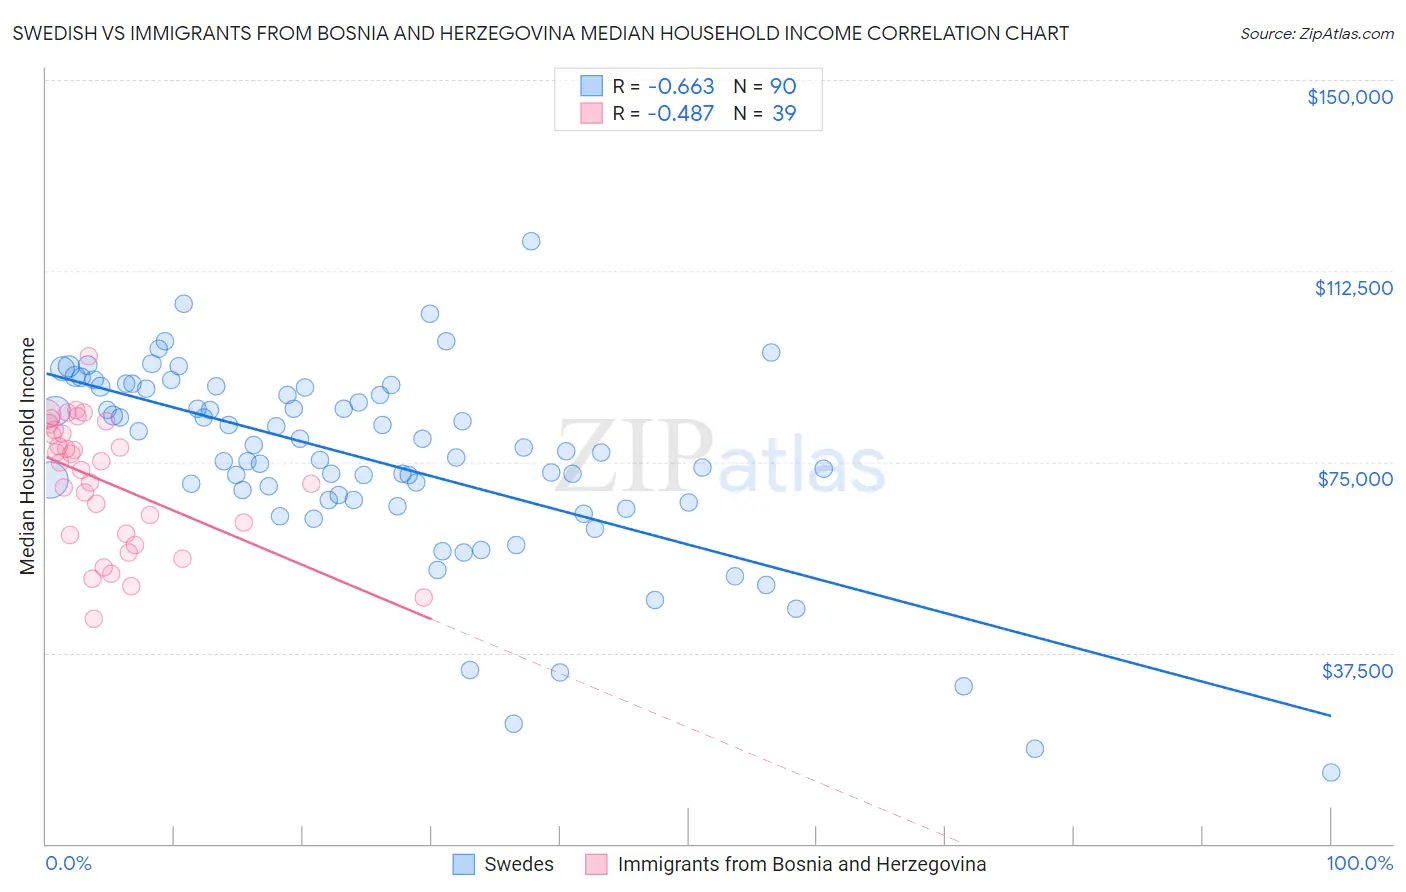 Swedish vs Immigrants from Bosnia and Herzegovina Median Household Income